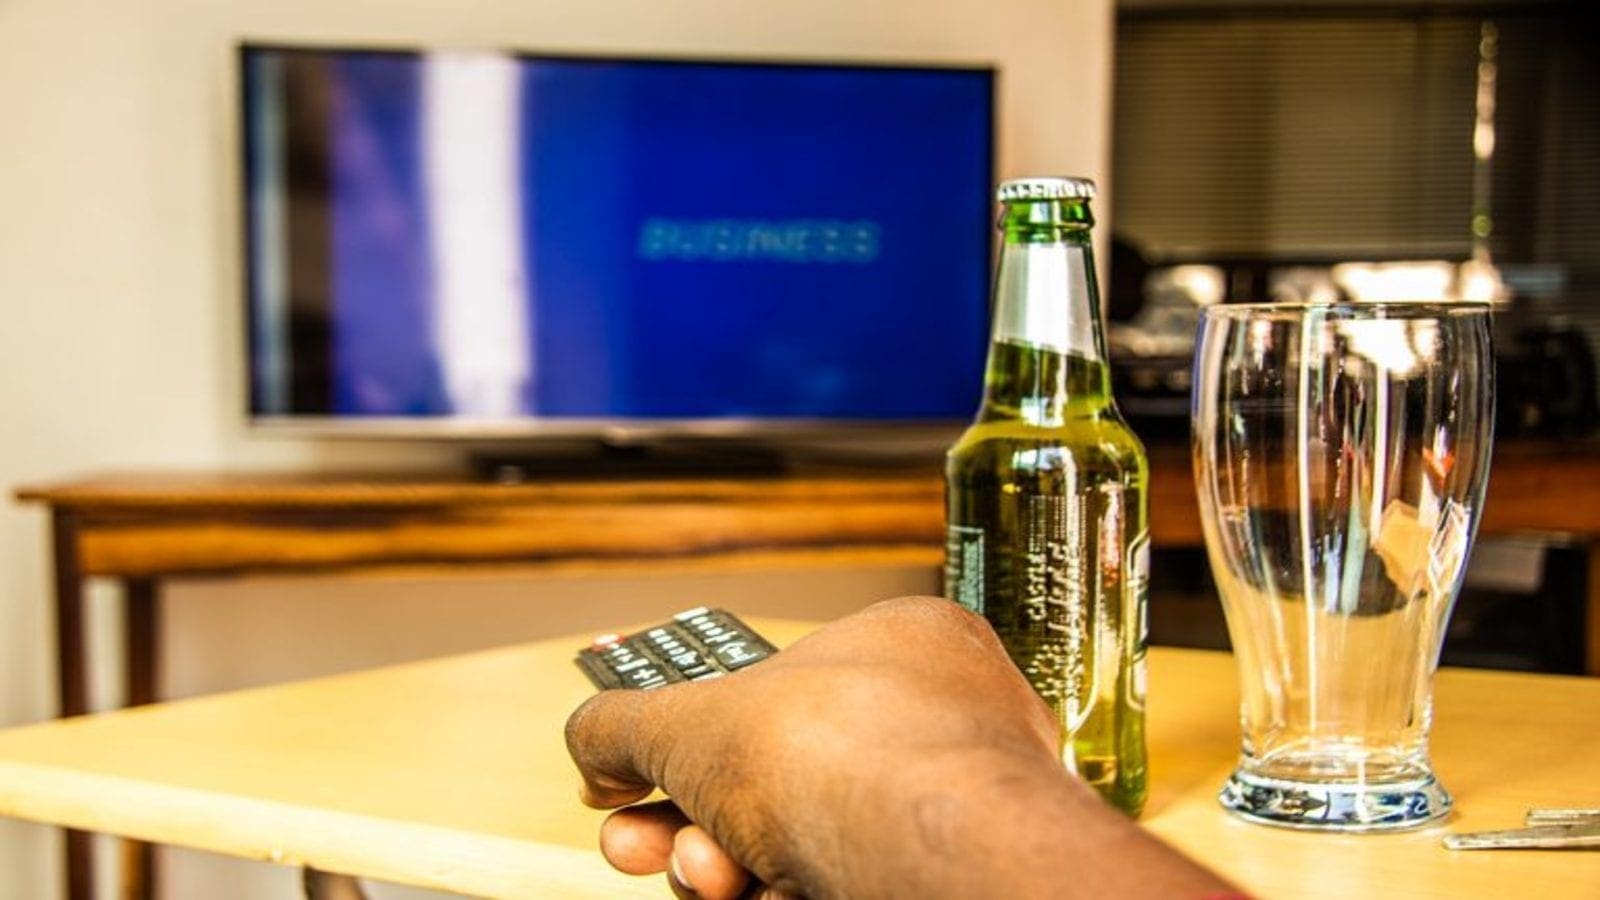 Zambian Breweries, Serengeti Breweries go digital in running business, initiatives